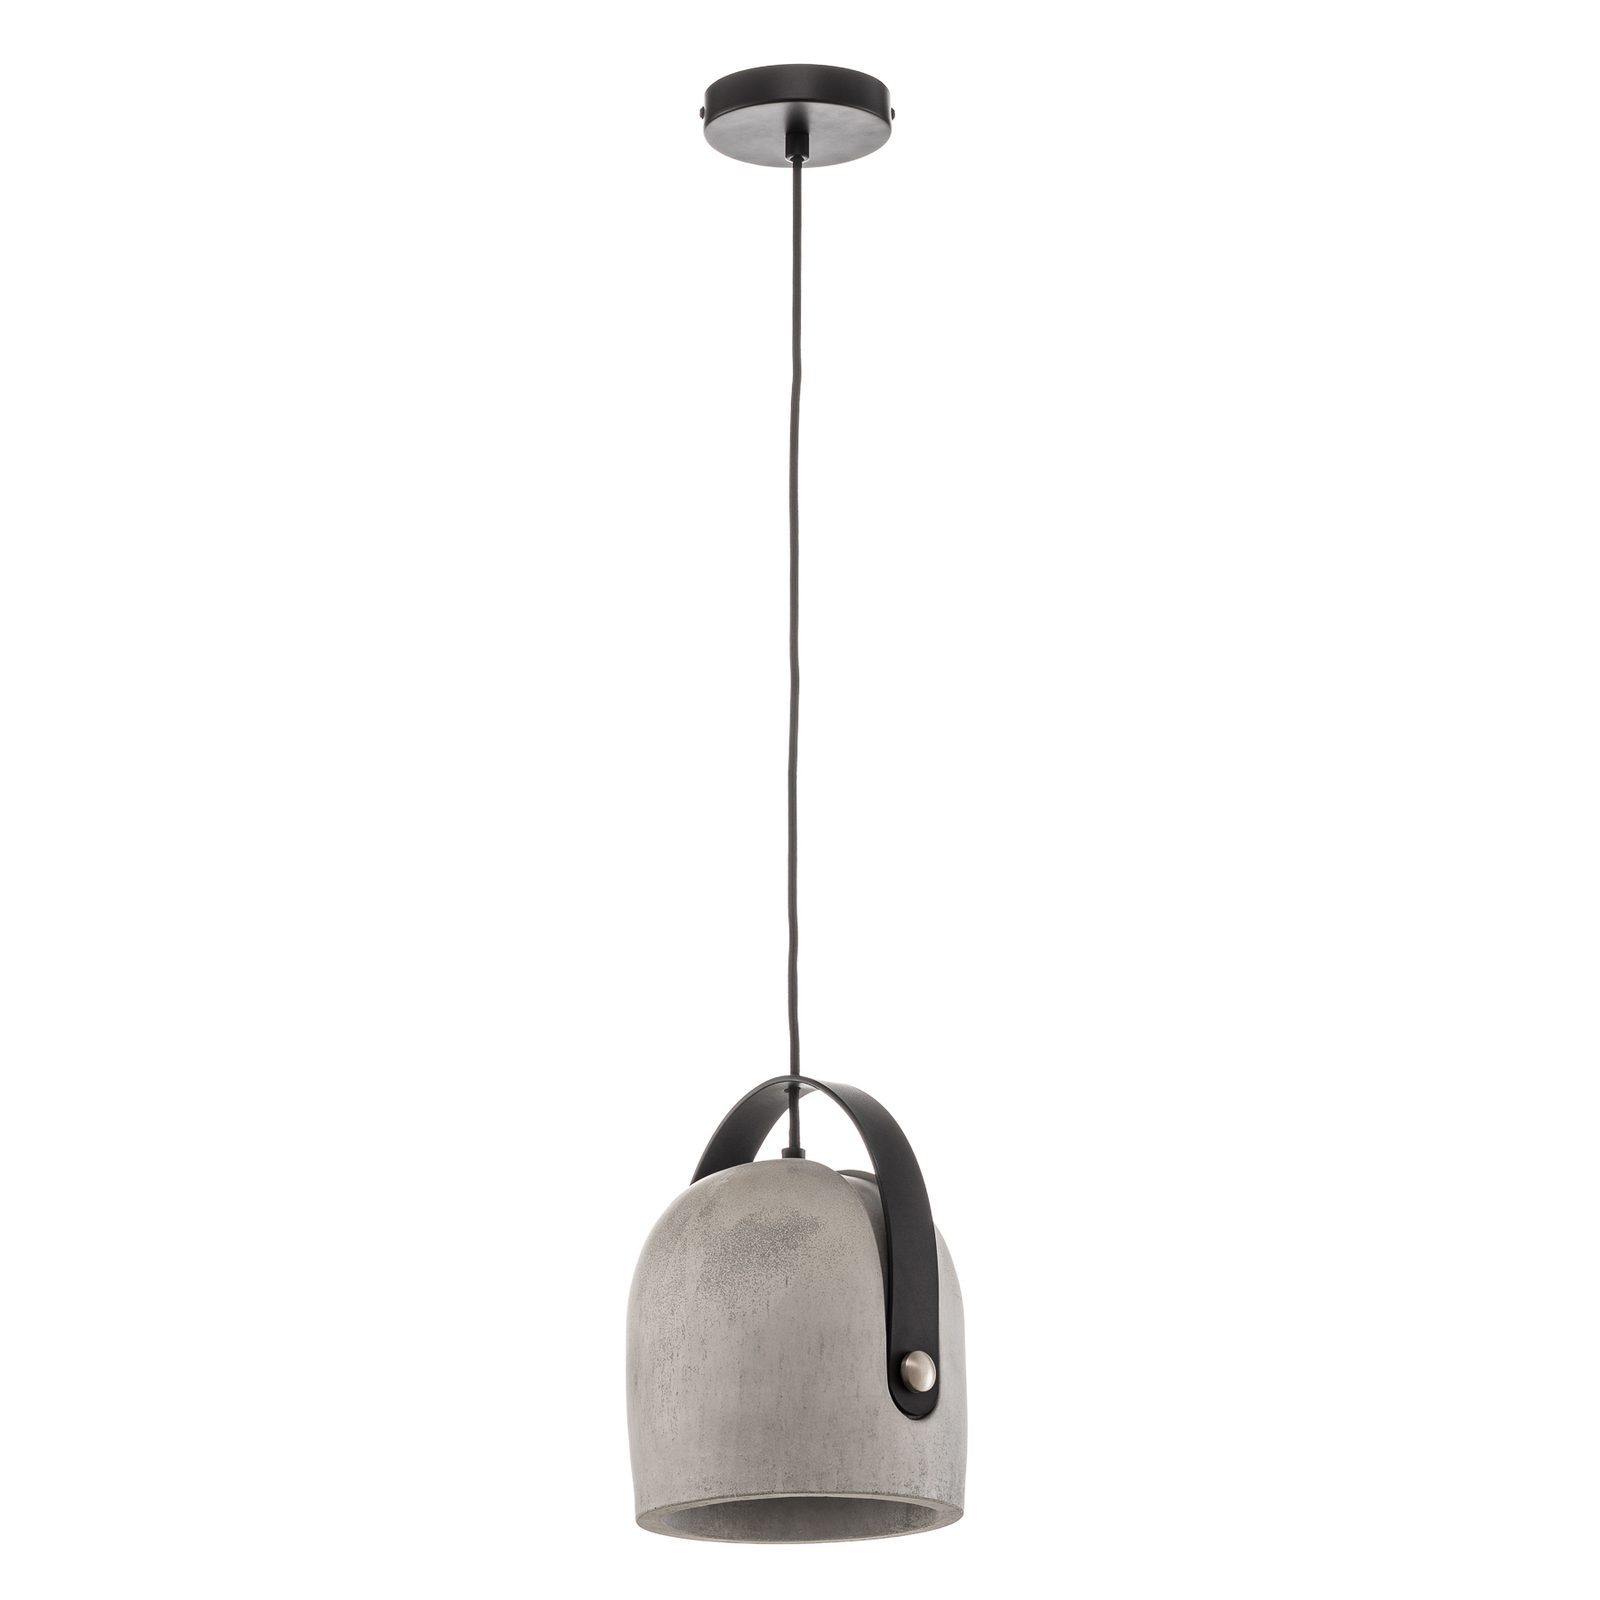 Trendy beton hanglamp Copain